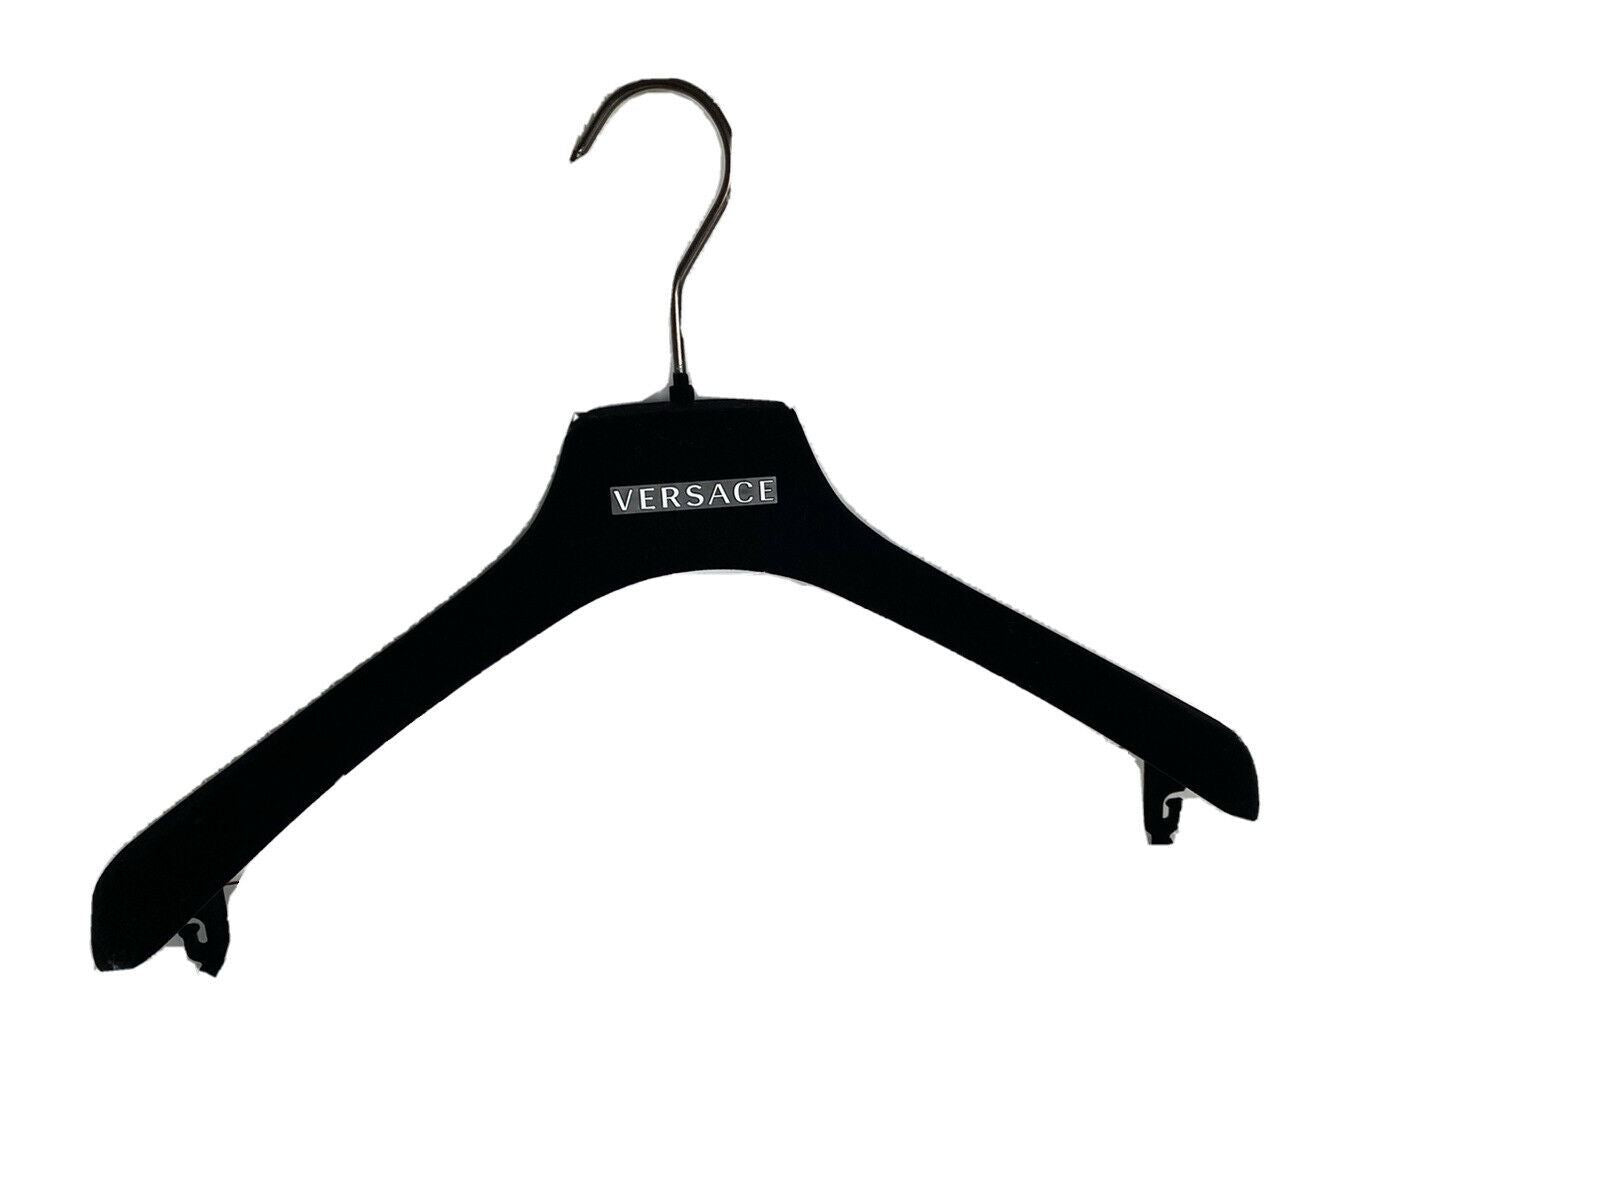 Versace Glass Bathrobe Hook Glossy Black Nickel Clothes Hanger